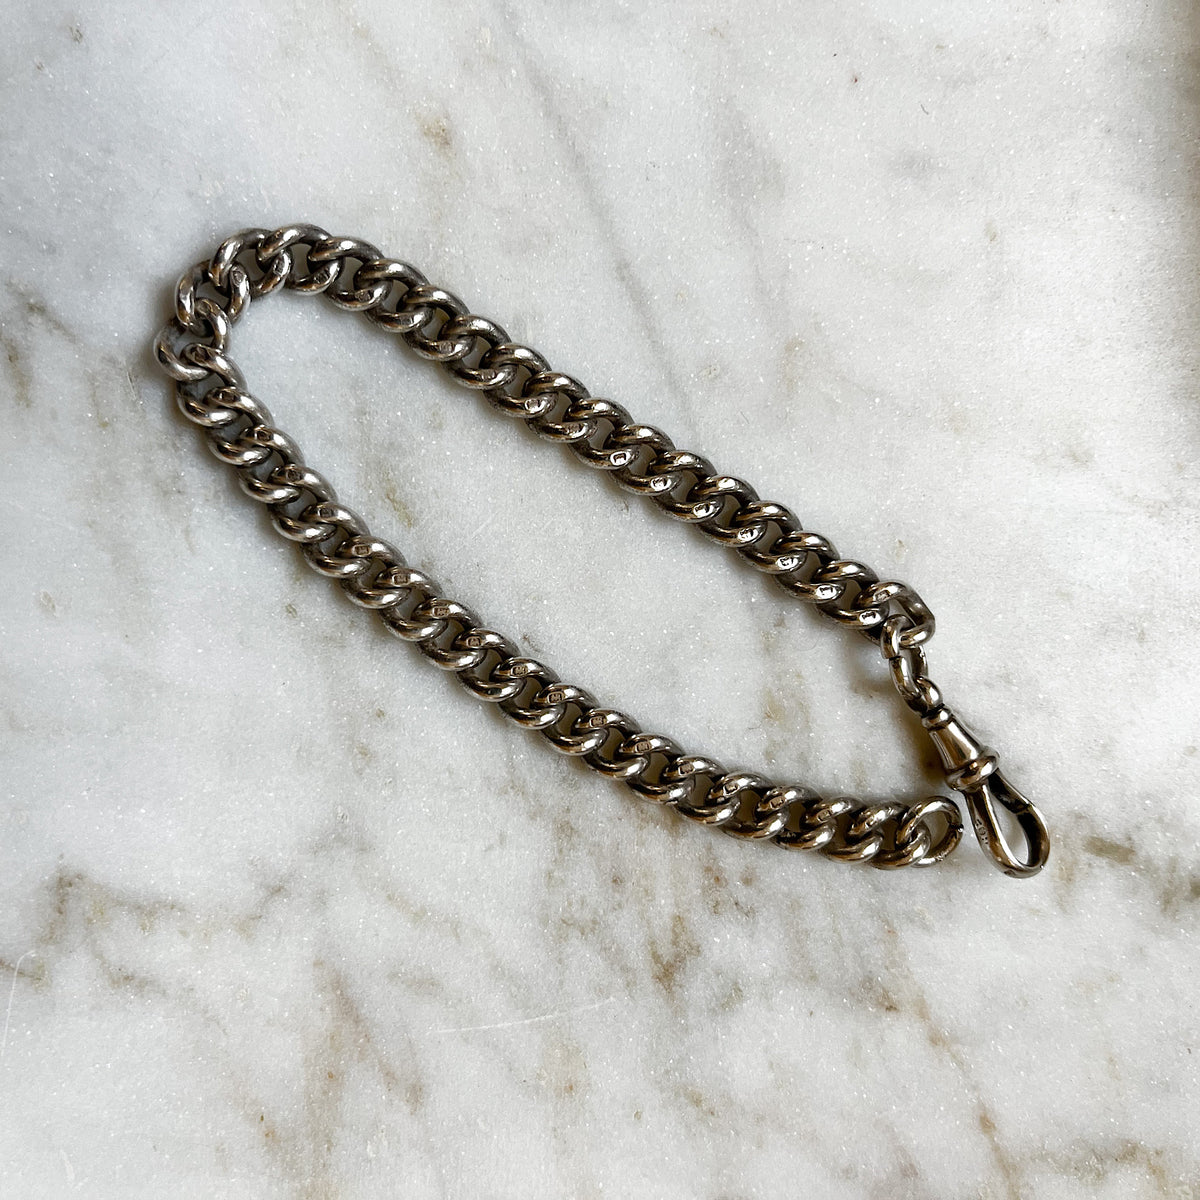 Antique Pocket Watch Chain Bracelet